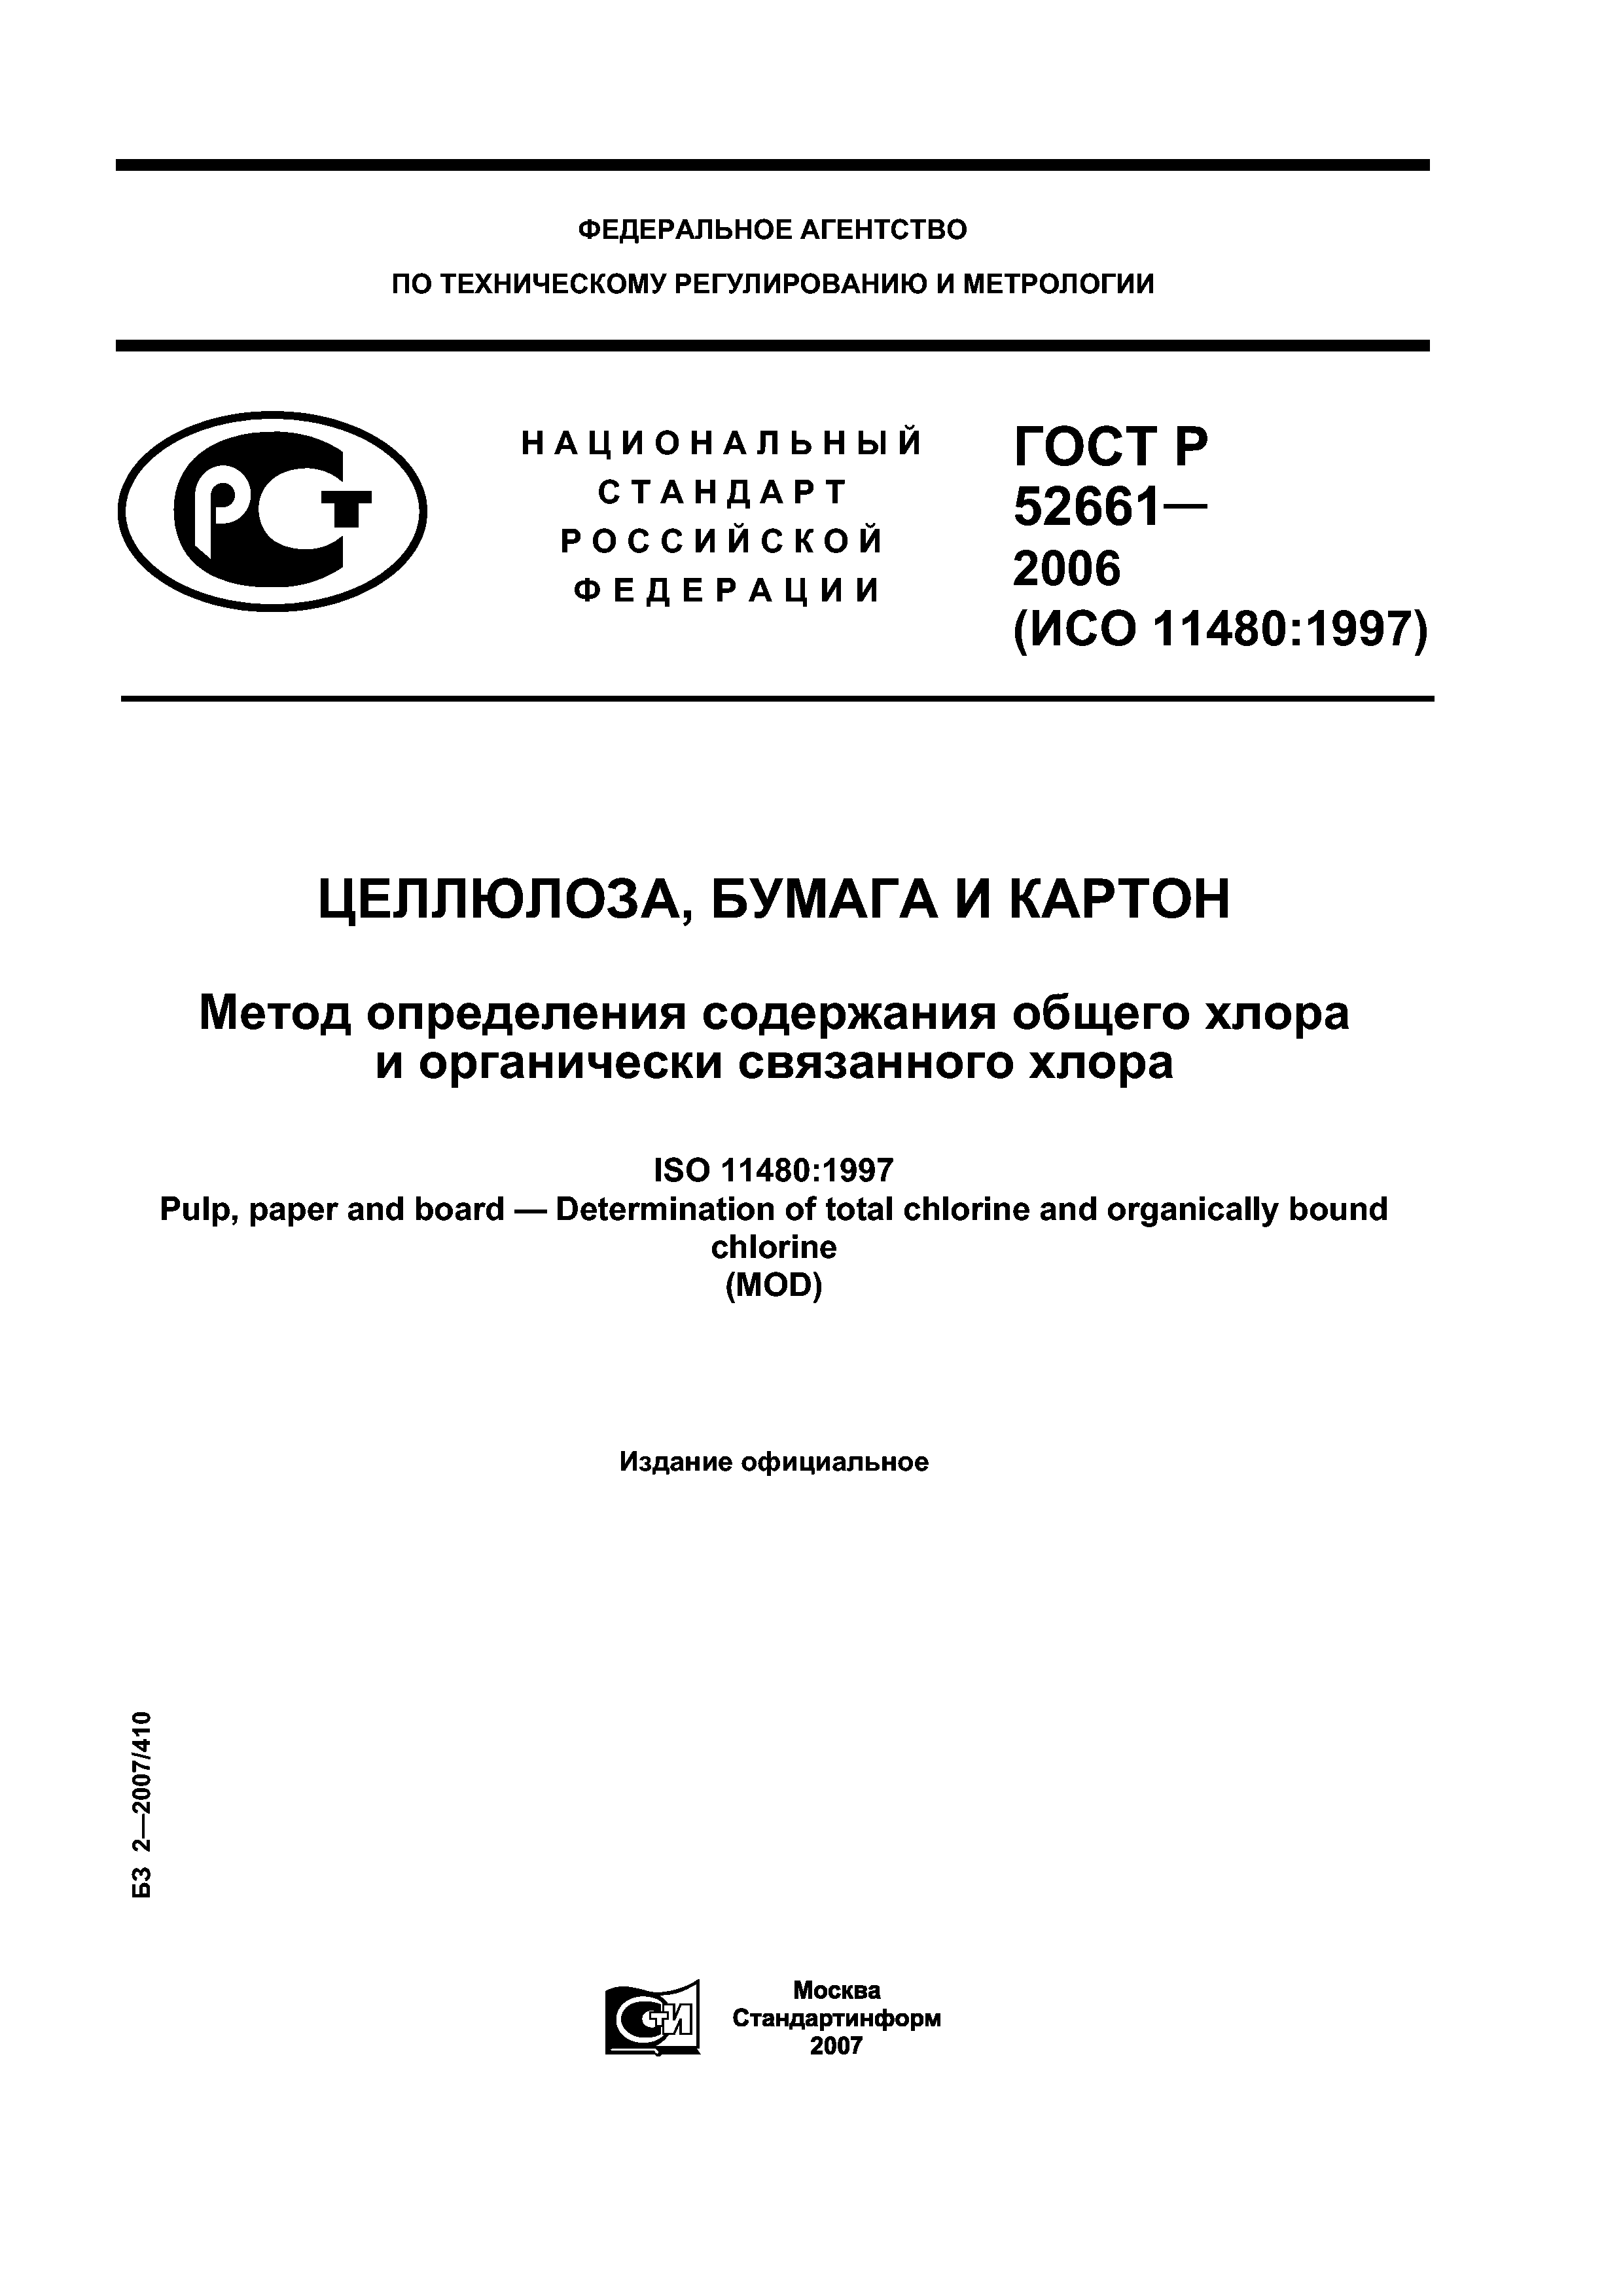 ГОСТ Р 52661-2006